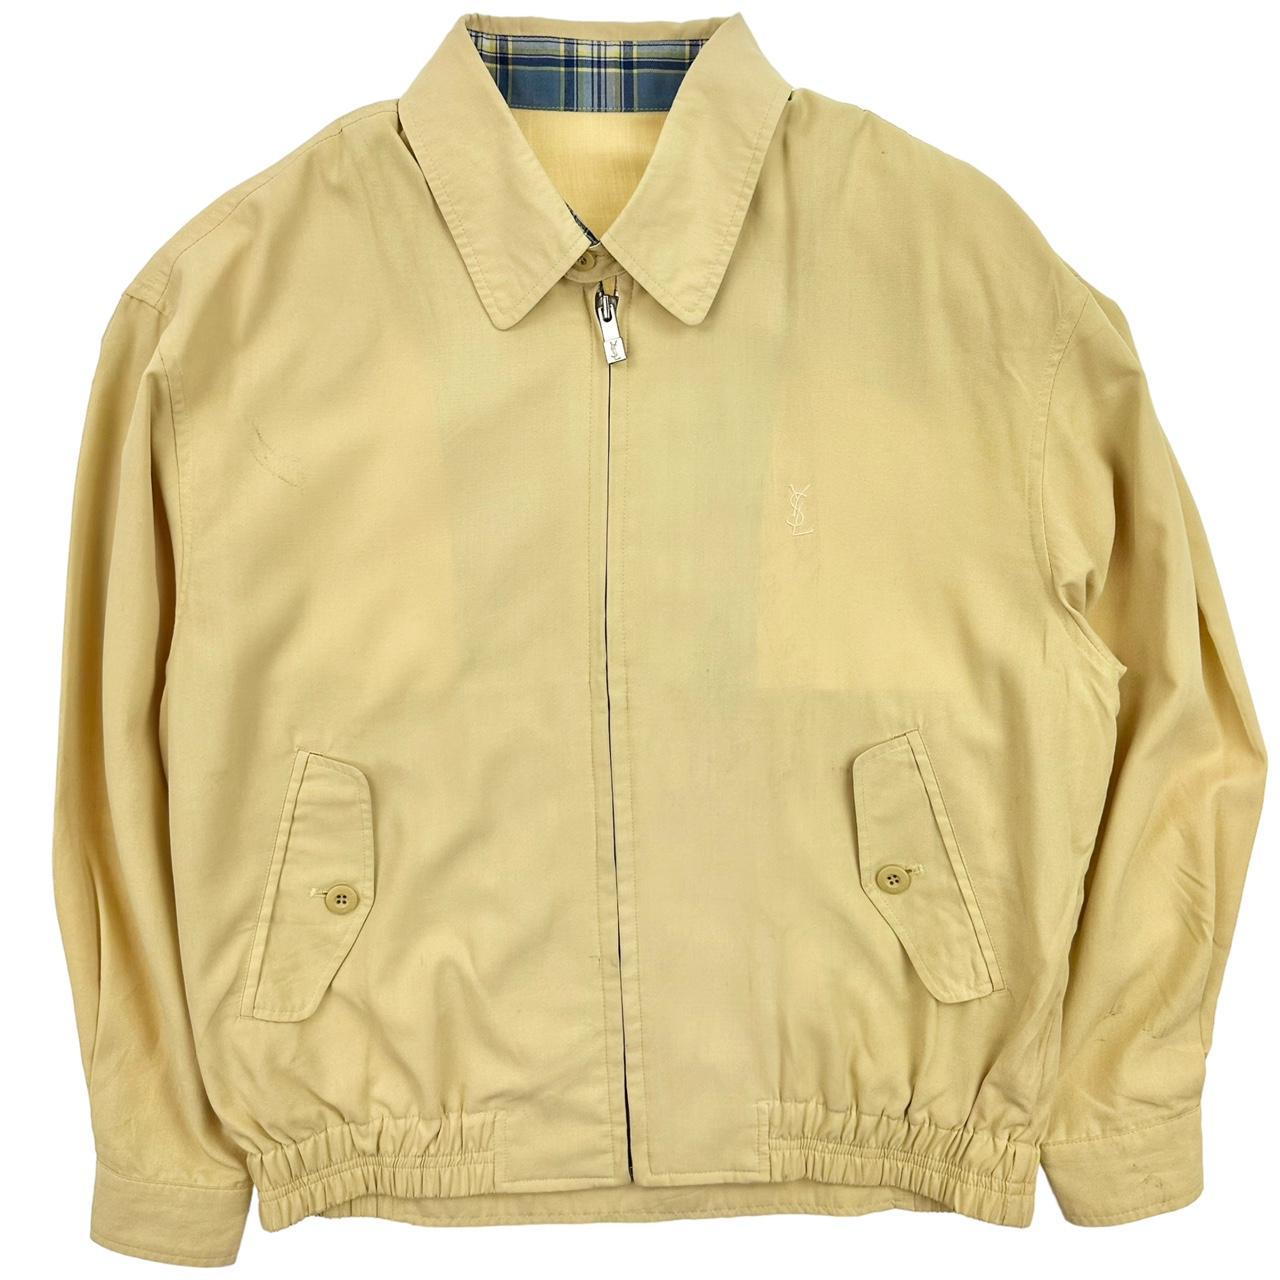 Vintage YSL Yves Saint Laurent Harrington jacket size S